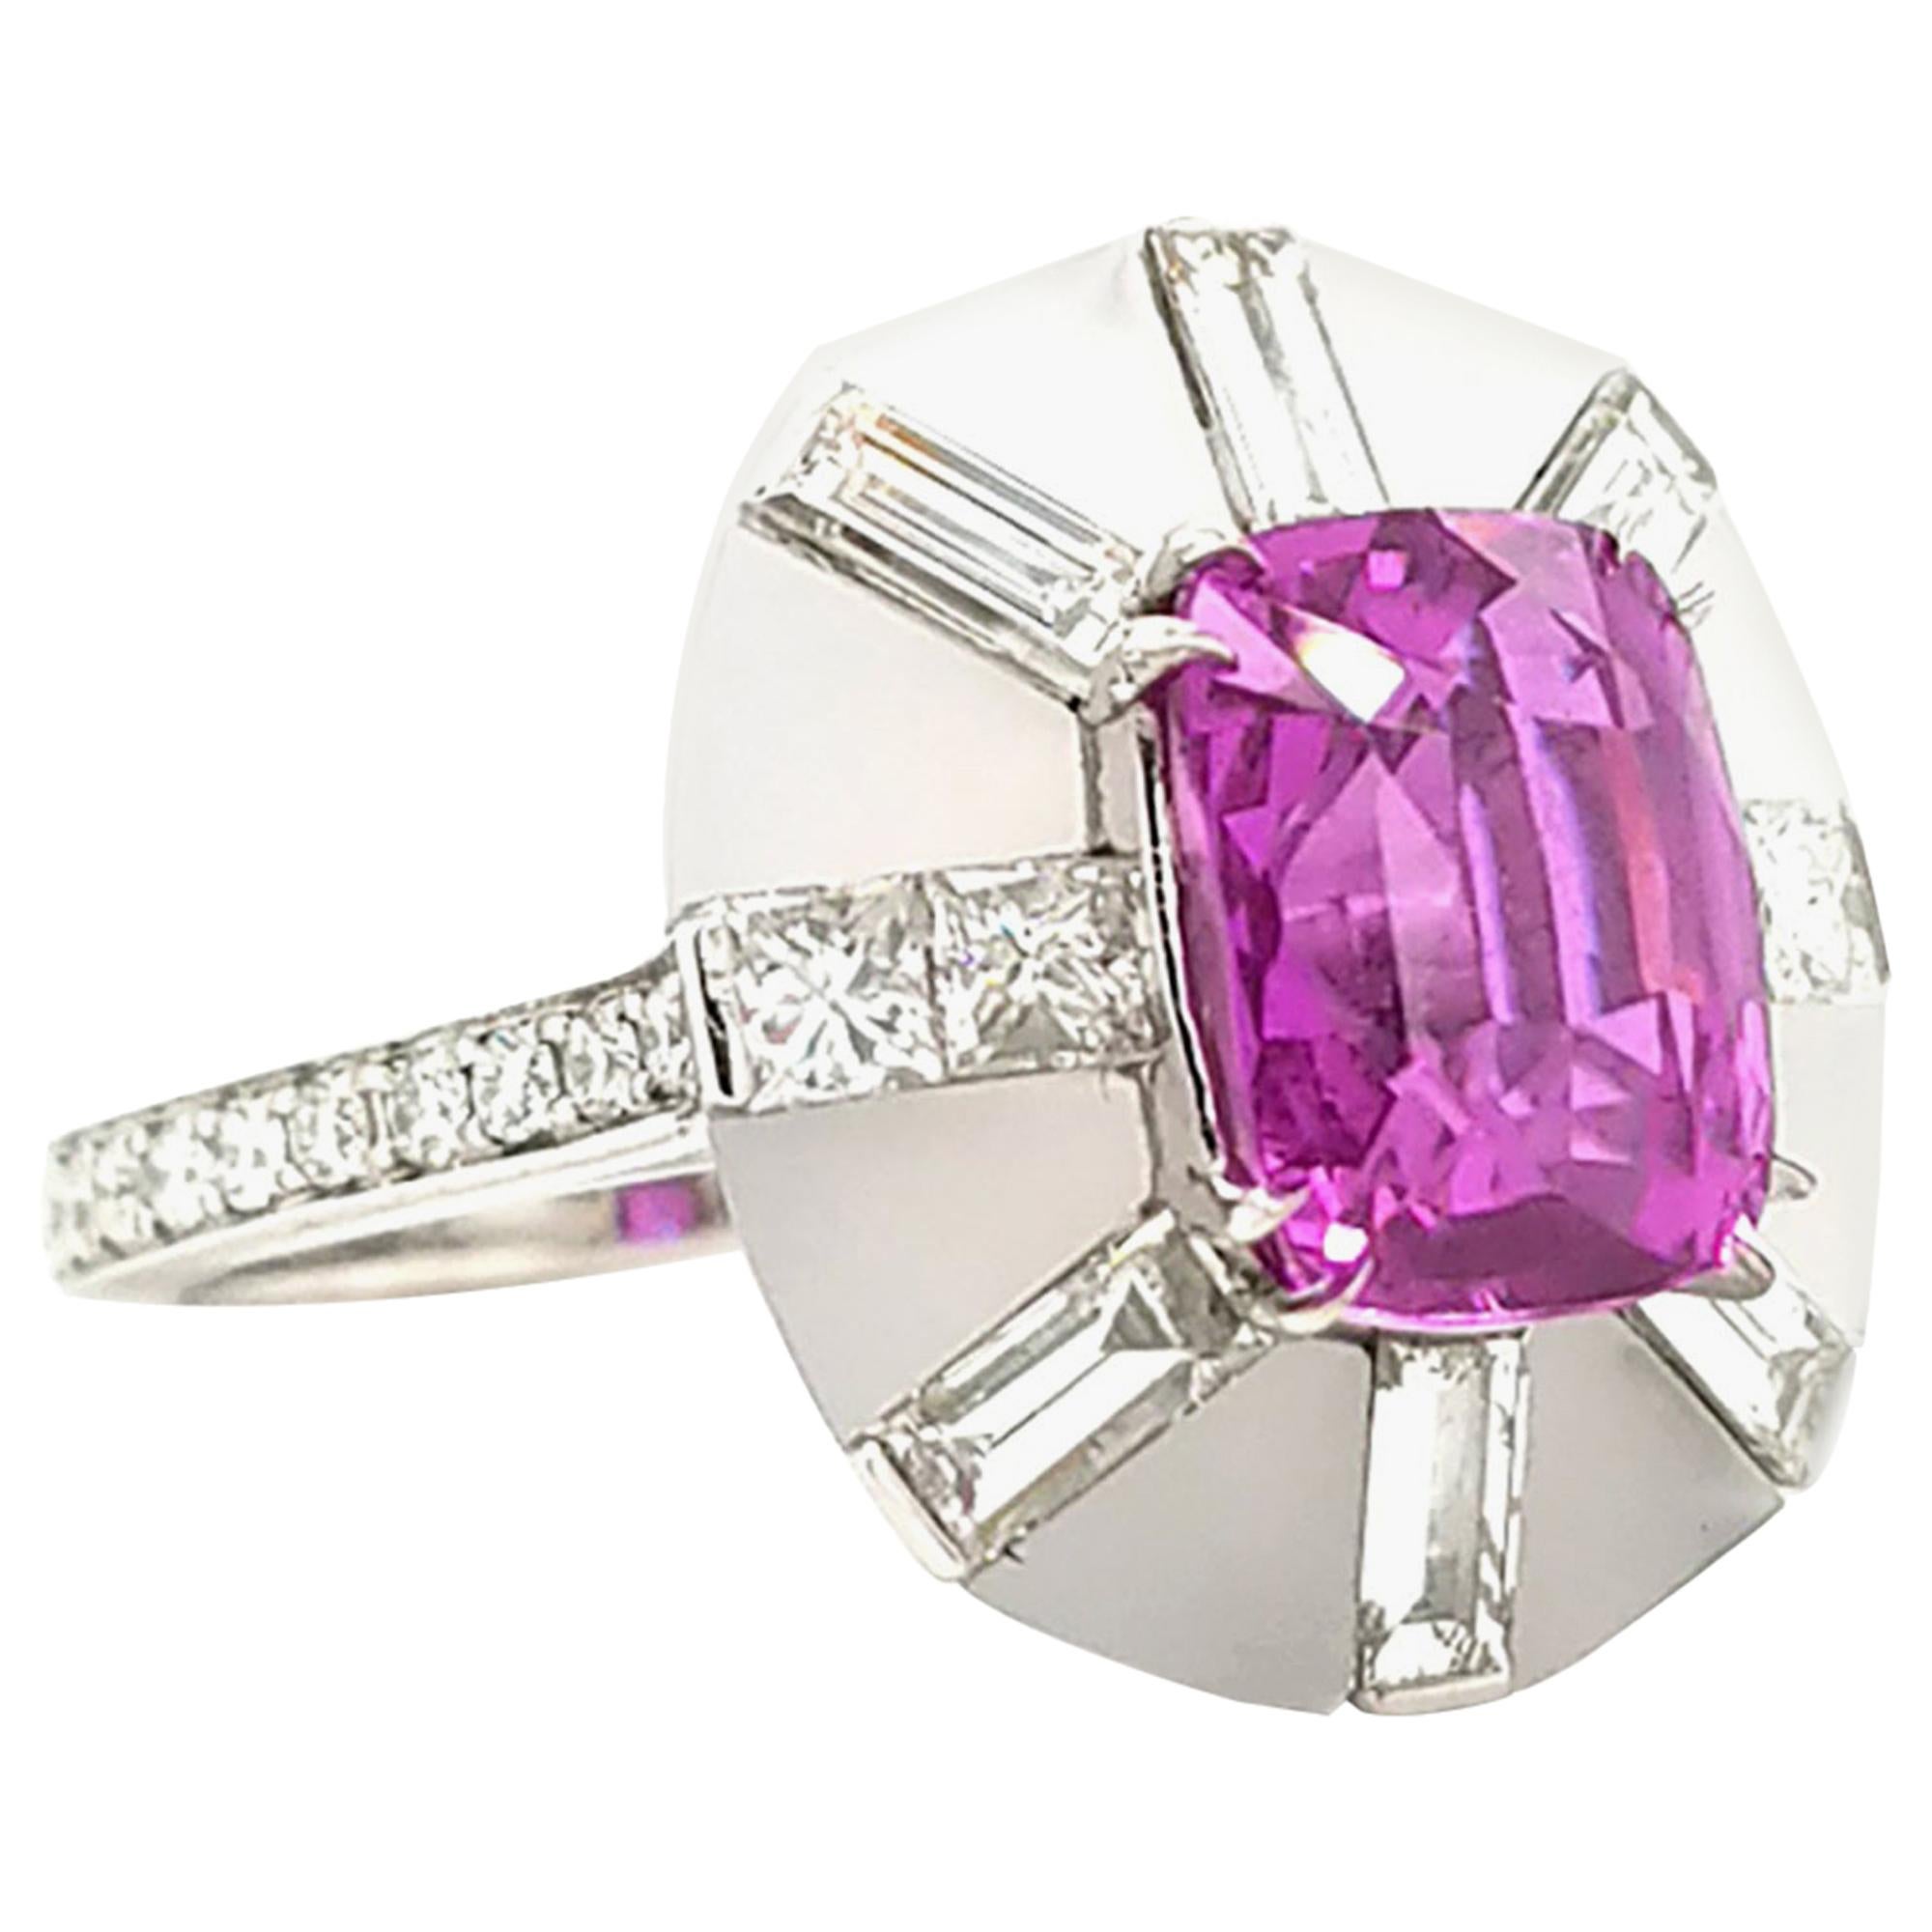 SSEF Certified 5.02 Carat Pink Sapphire Diamond Cocktail Ring